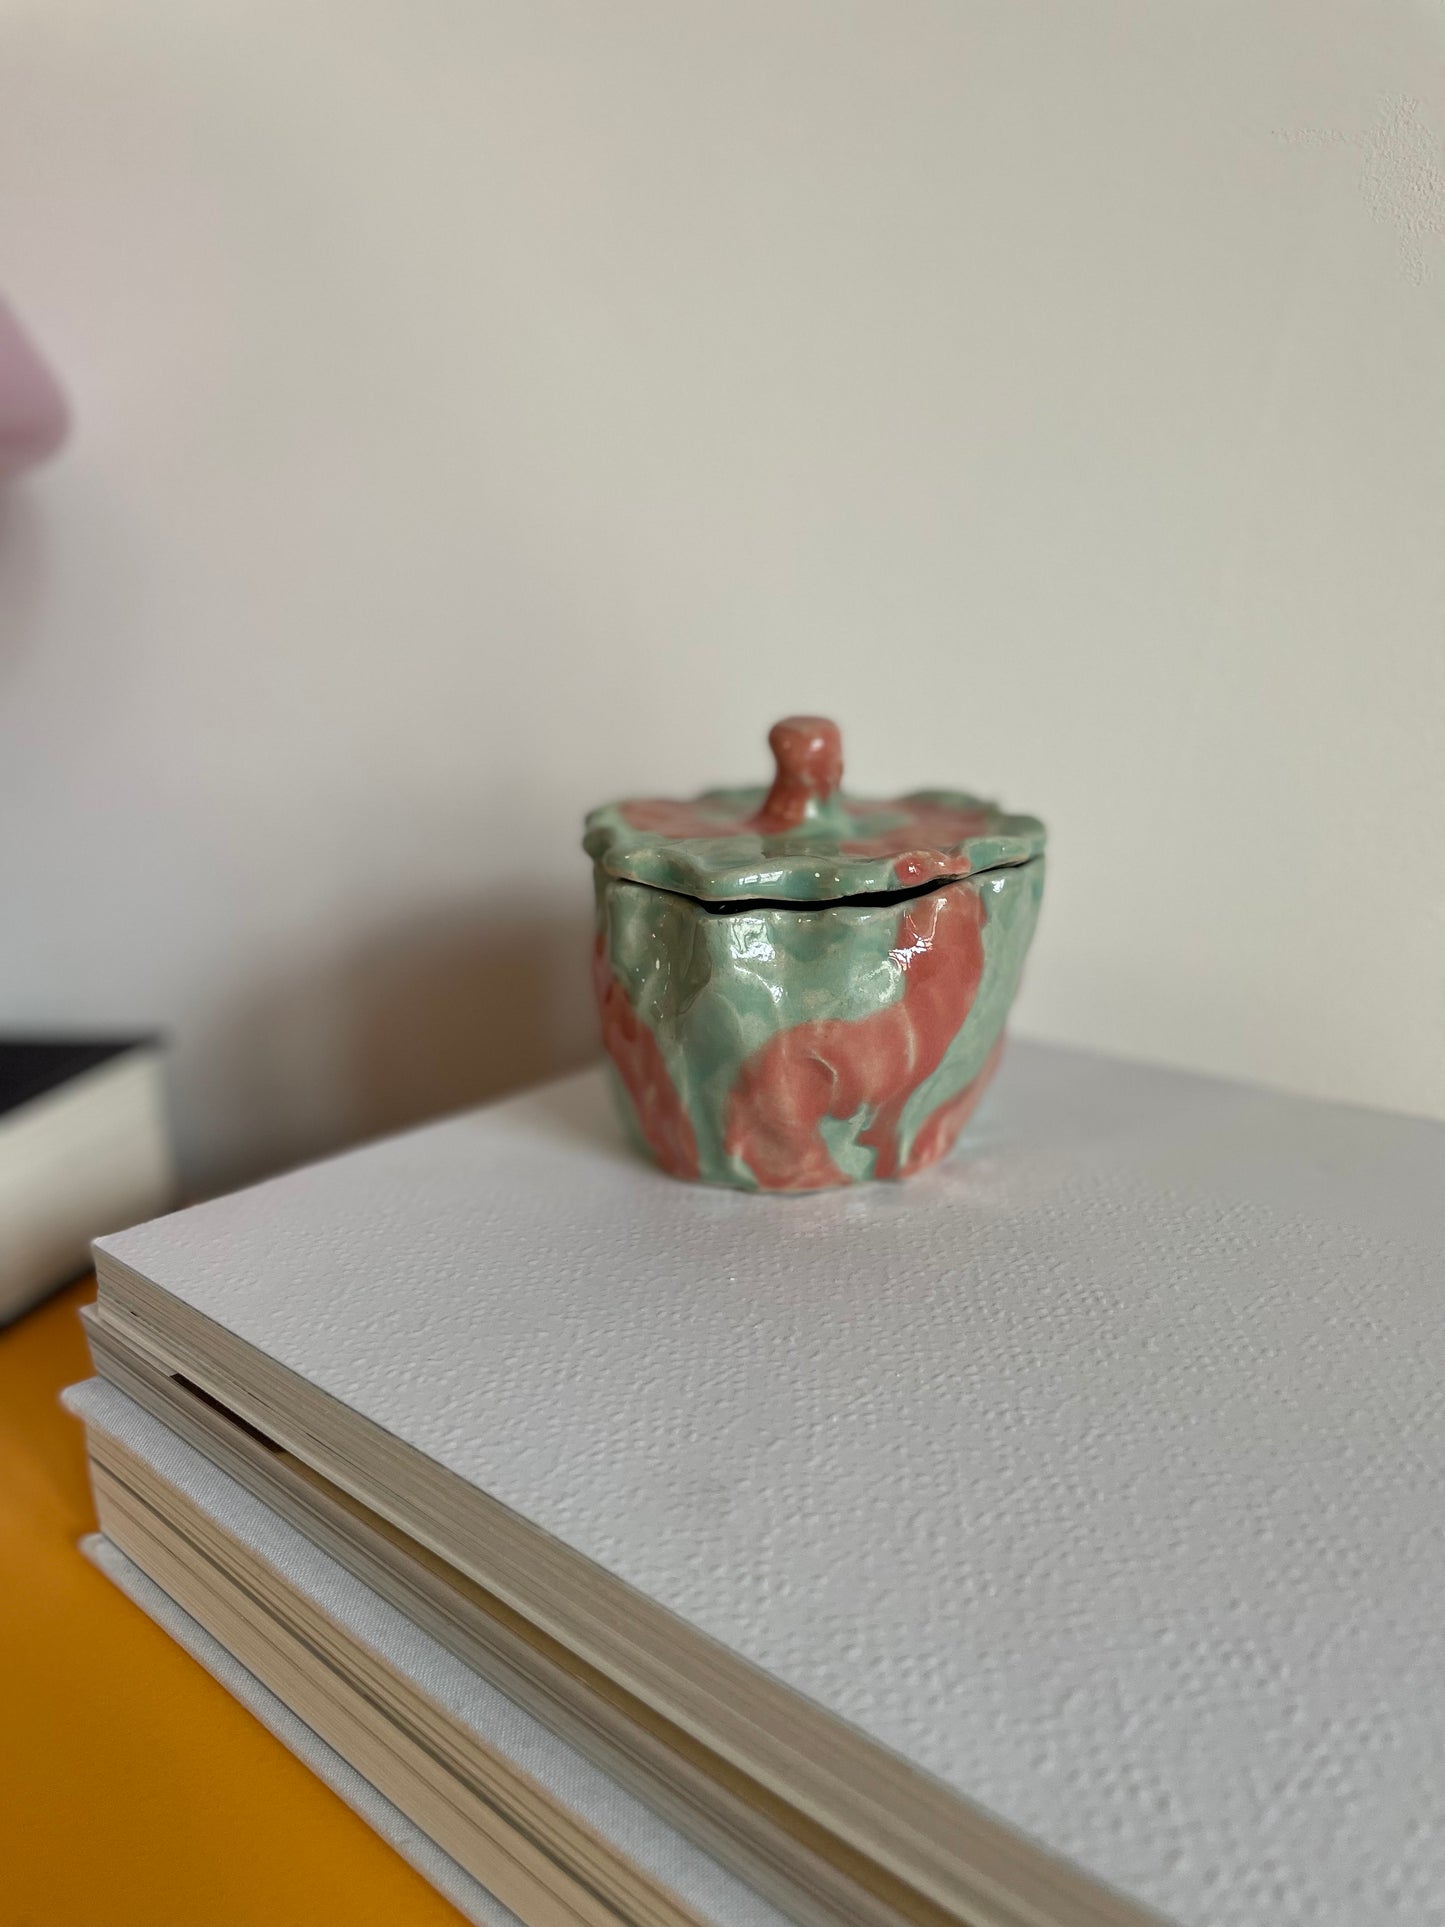 Colored ceramic - jar with lid